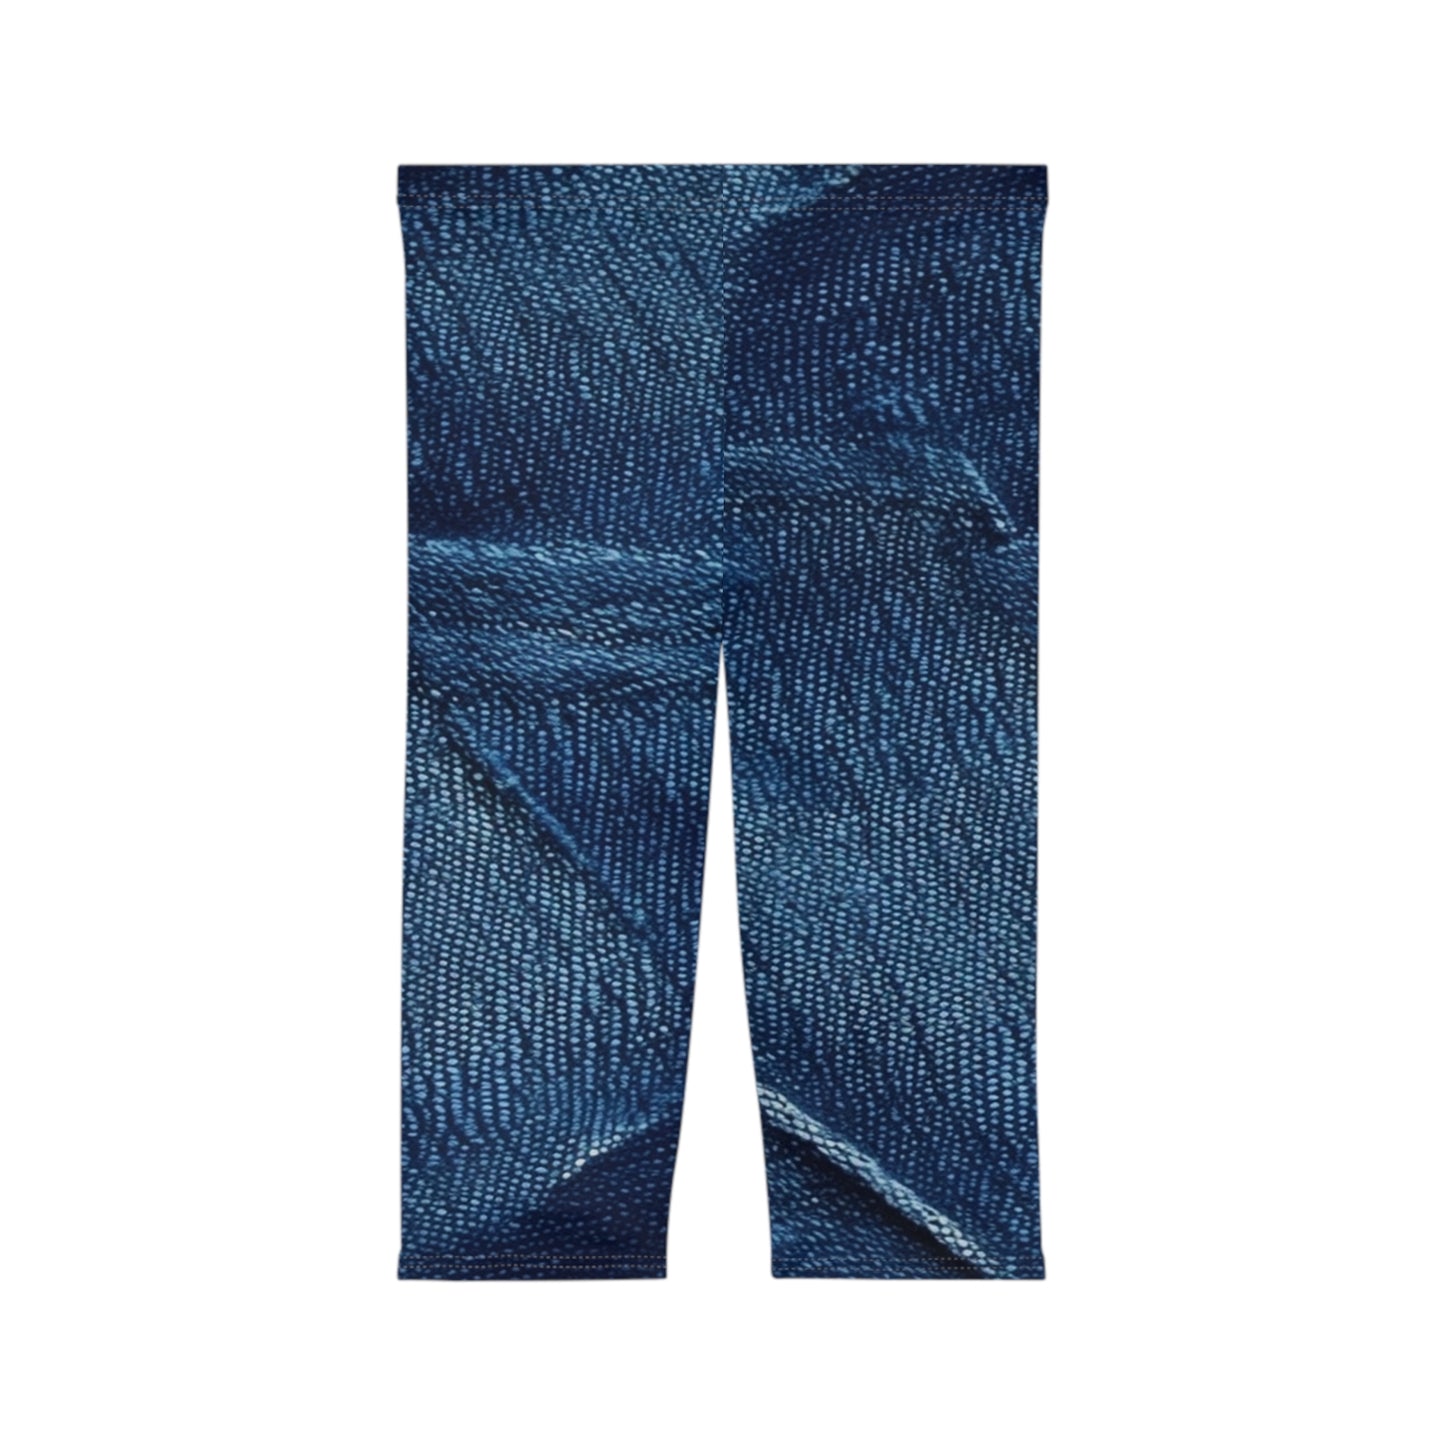 Dark Blue: Distressed Denim-Inspired Fabric Design - Women’s Capri Leggings (AOP)